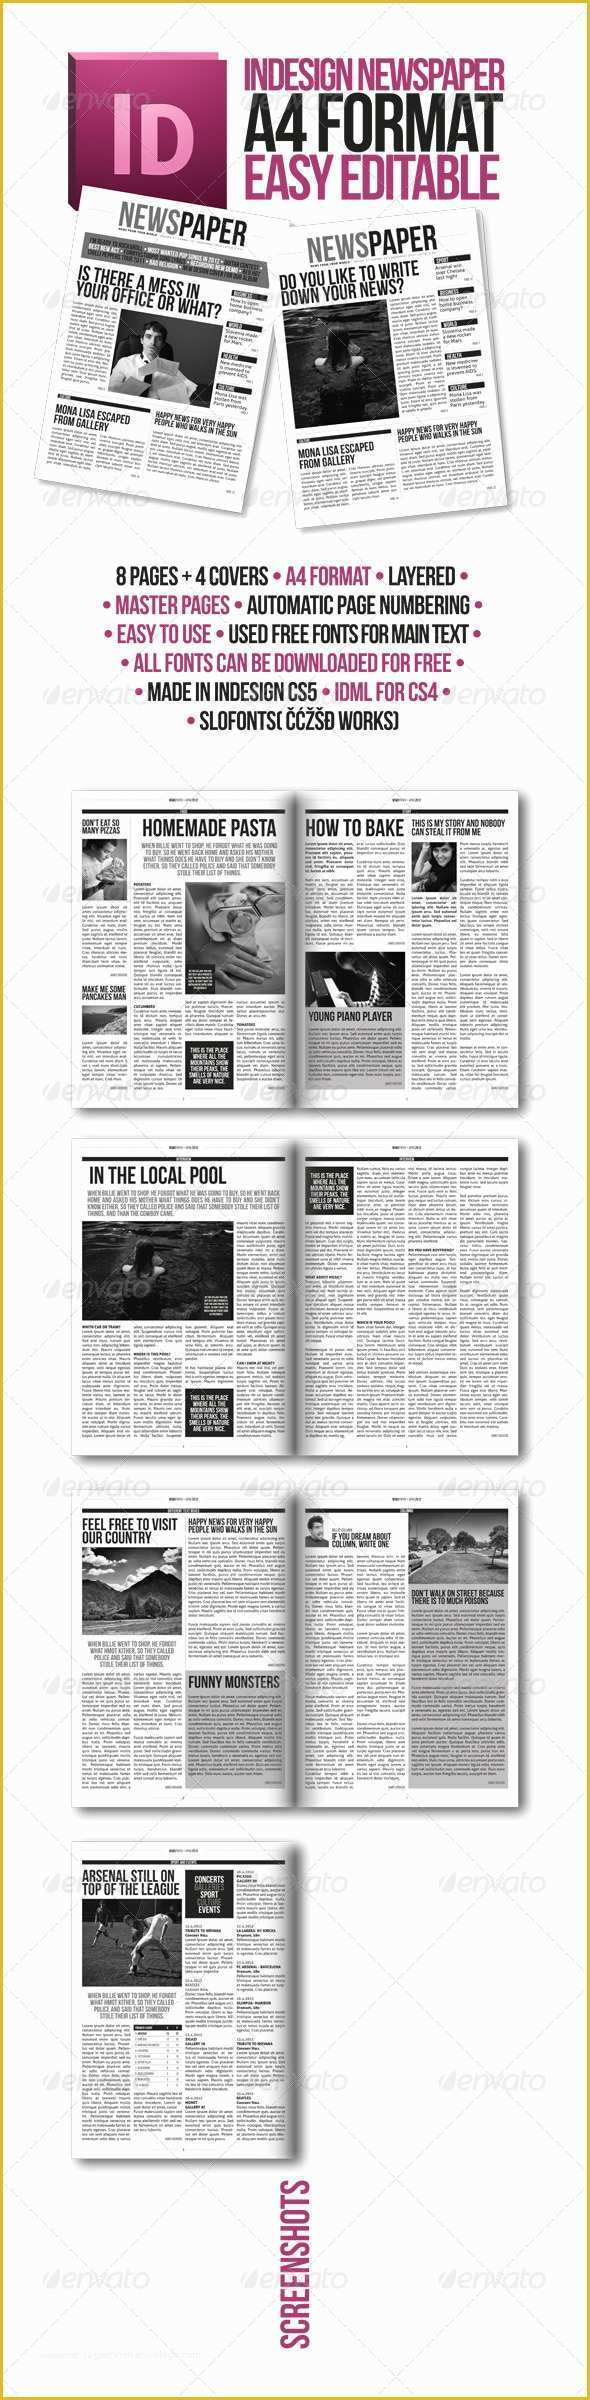 Indesign Newspaper Template Free Of Indesign Modern Newspaper Magazine Template A4 by Zigazi83